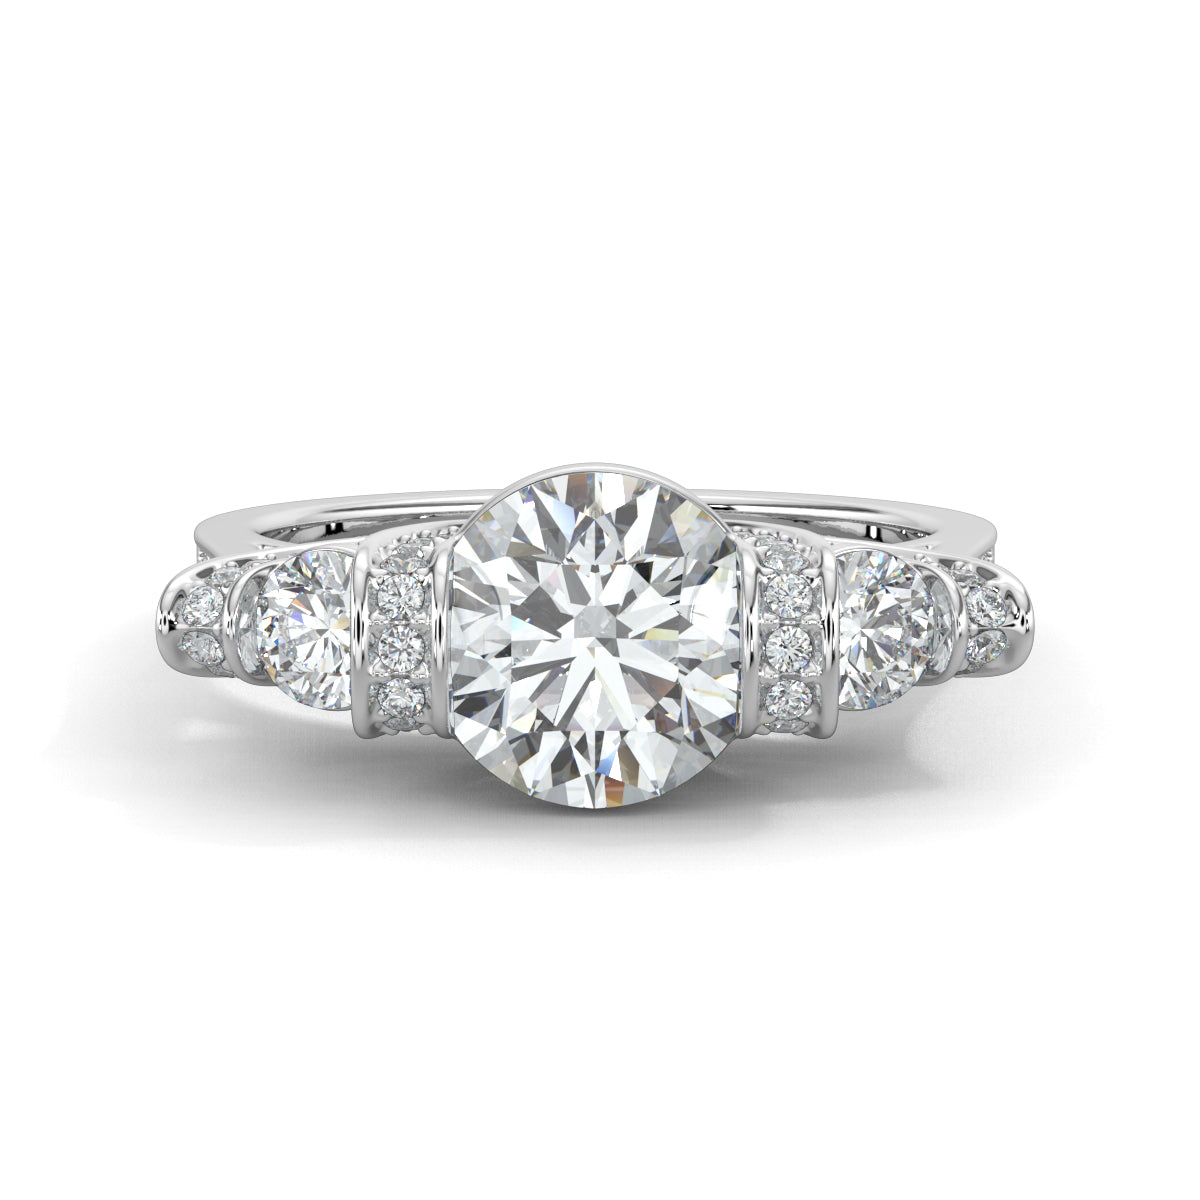 White Gold, Diamond Ring, Enigma solitaire ring, natural diamonds, lab-grown diamonds, trellis band, round diamonds, elegant jewelry